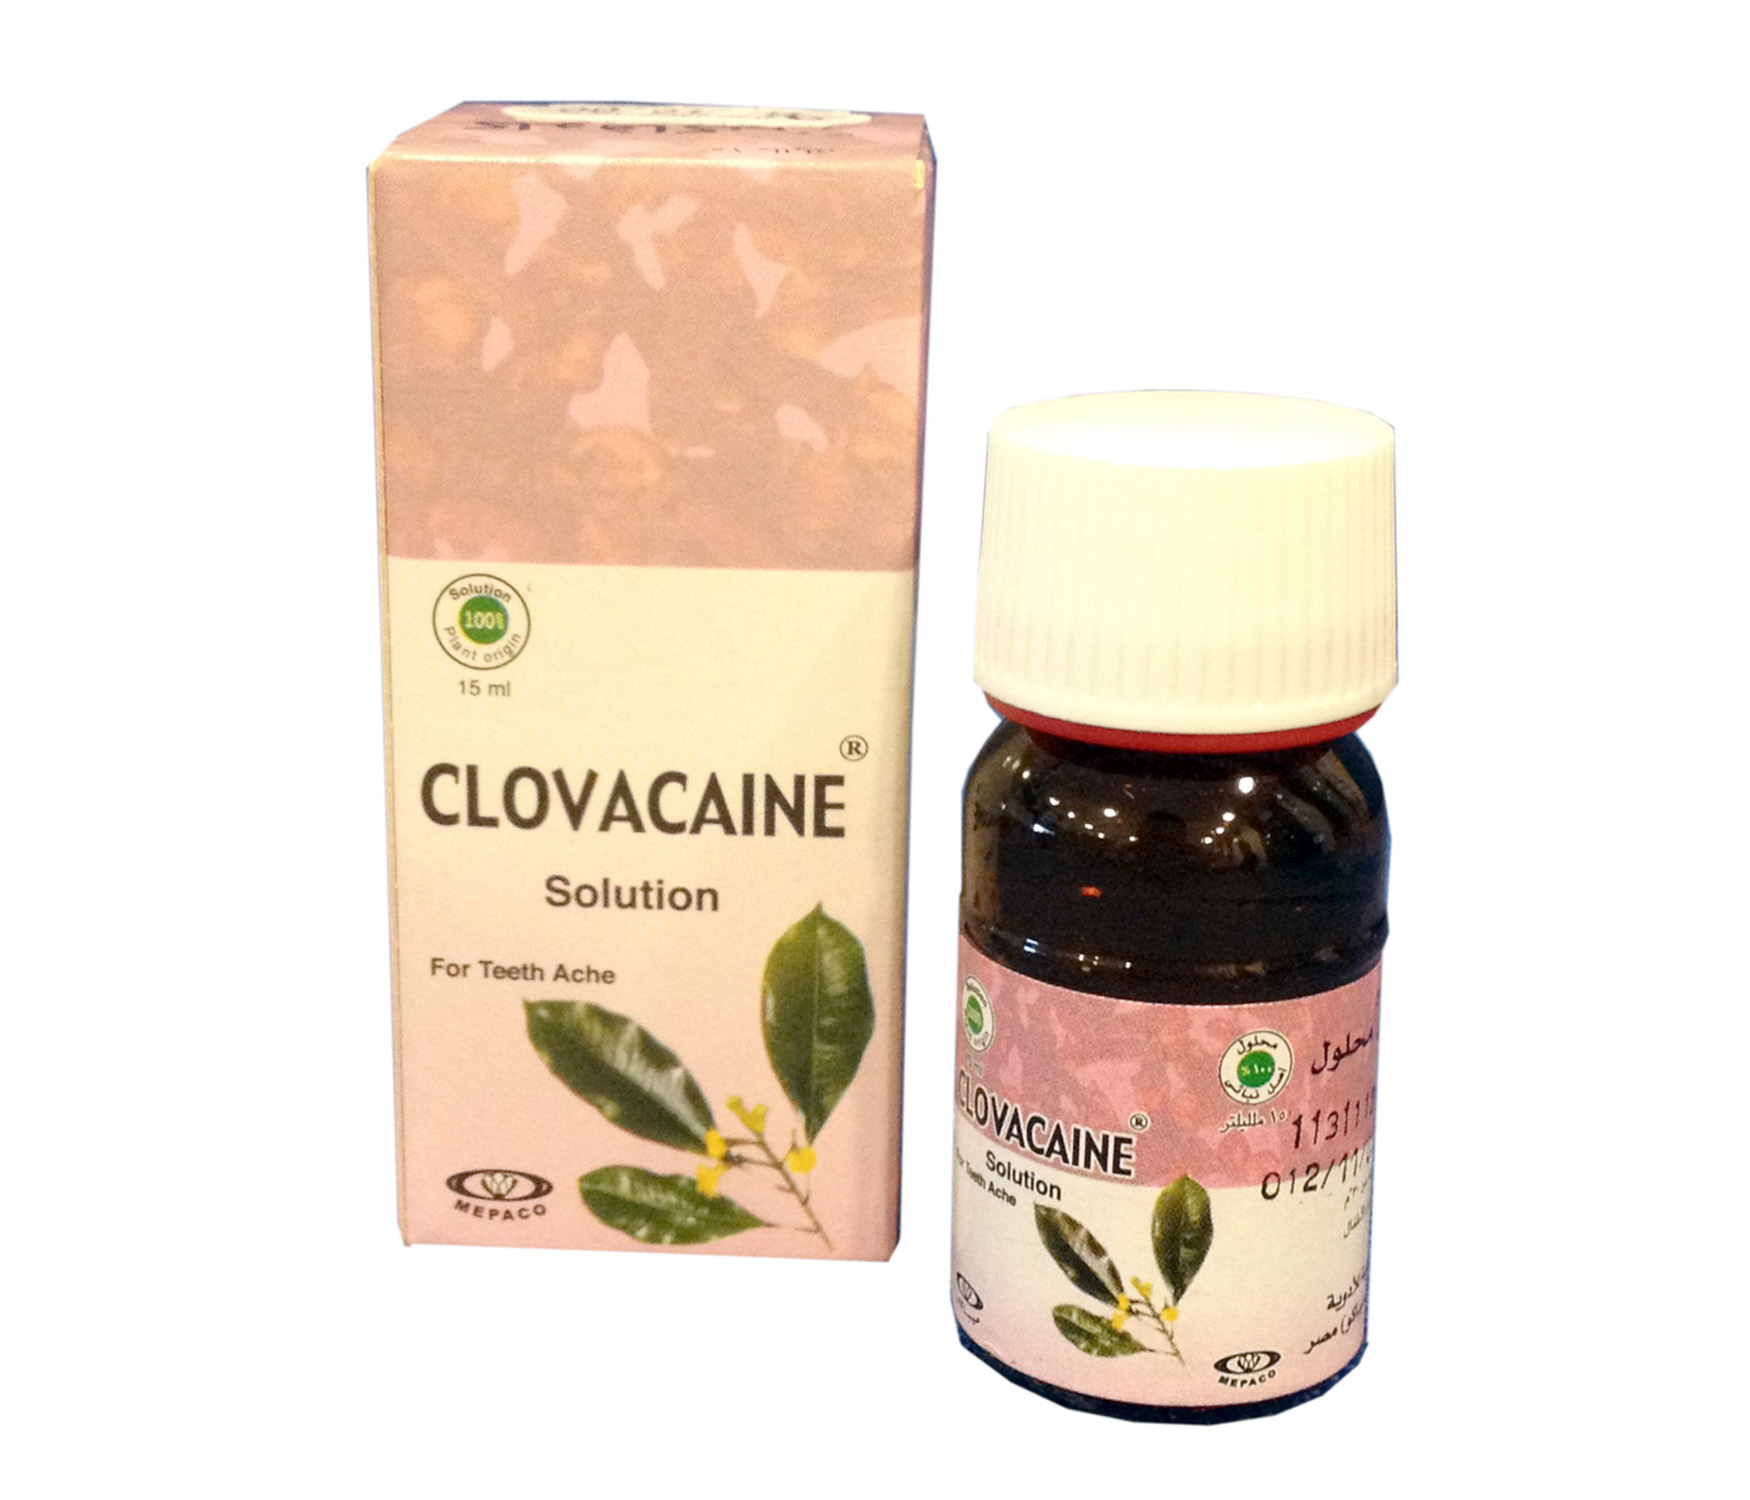 Clovacaine Solution for Toothache